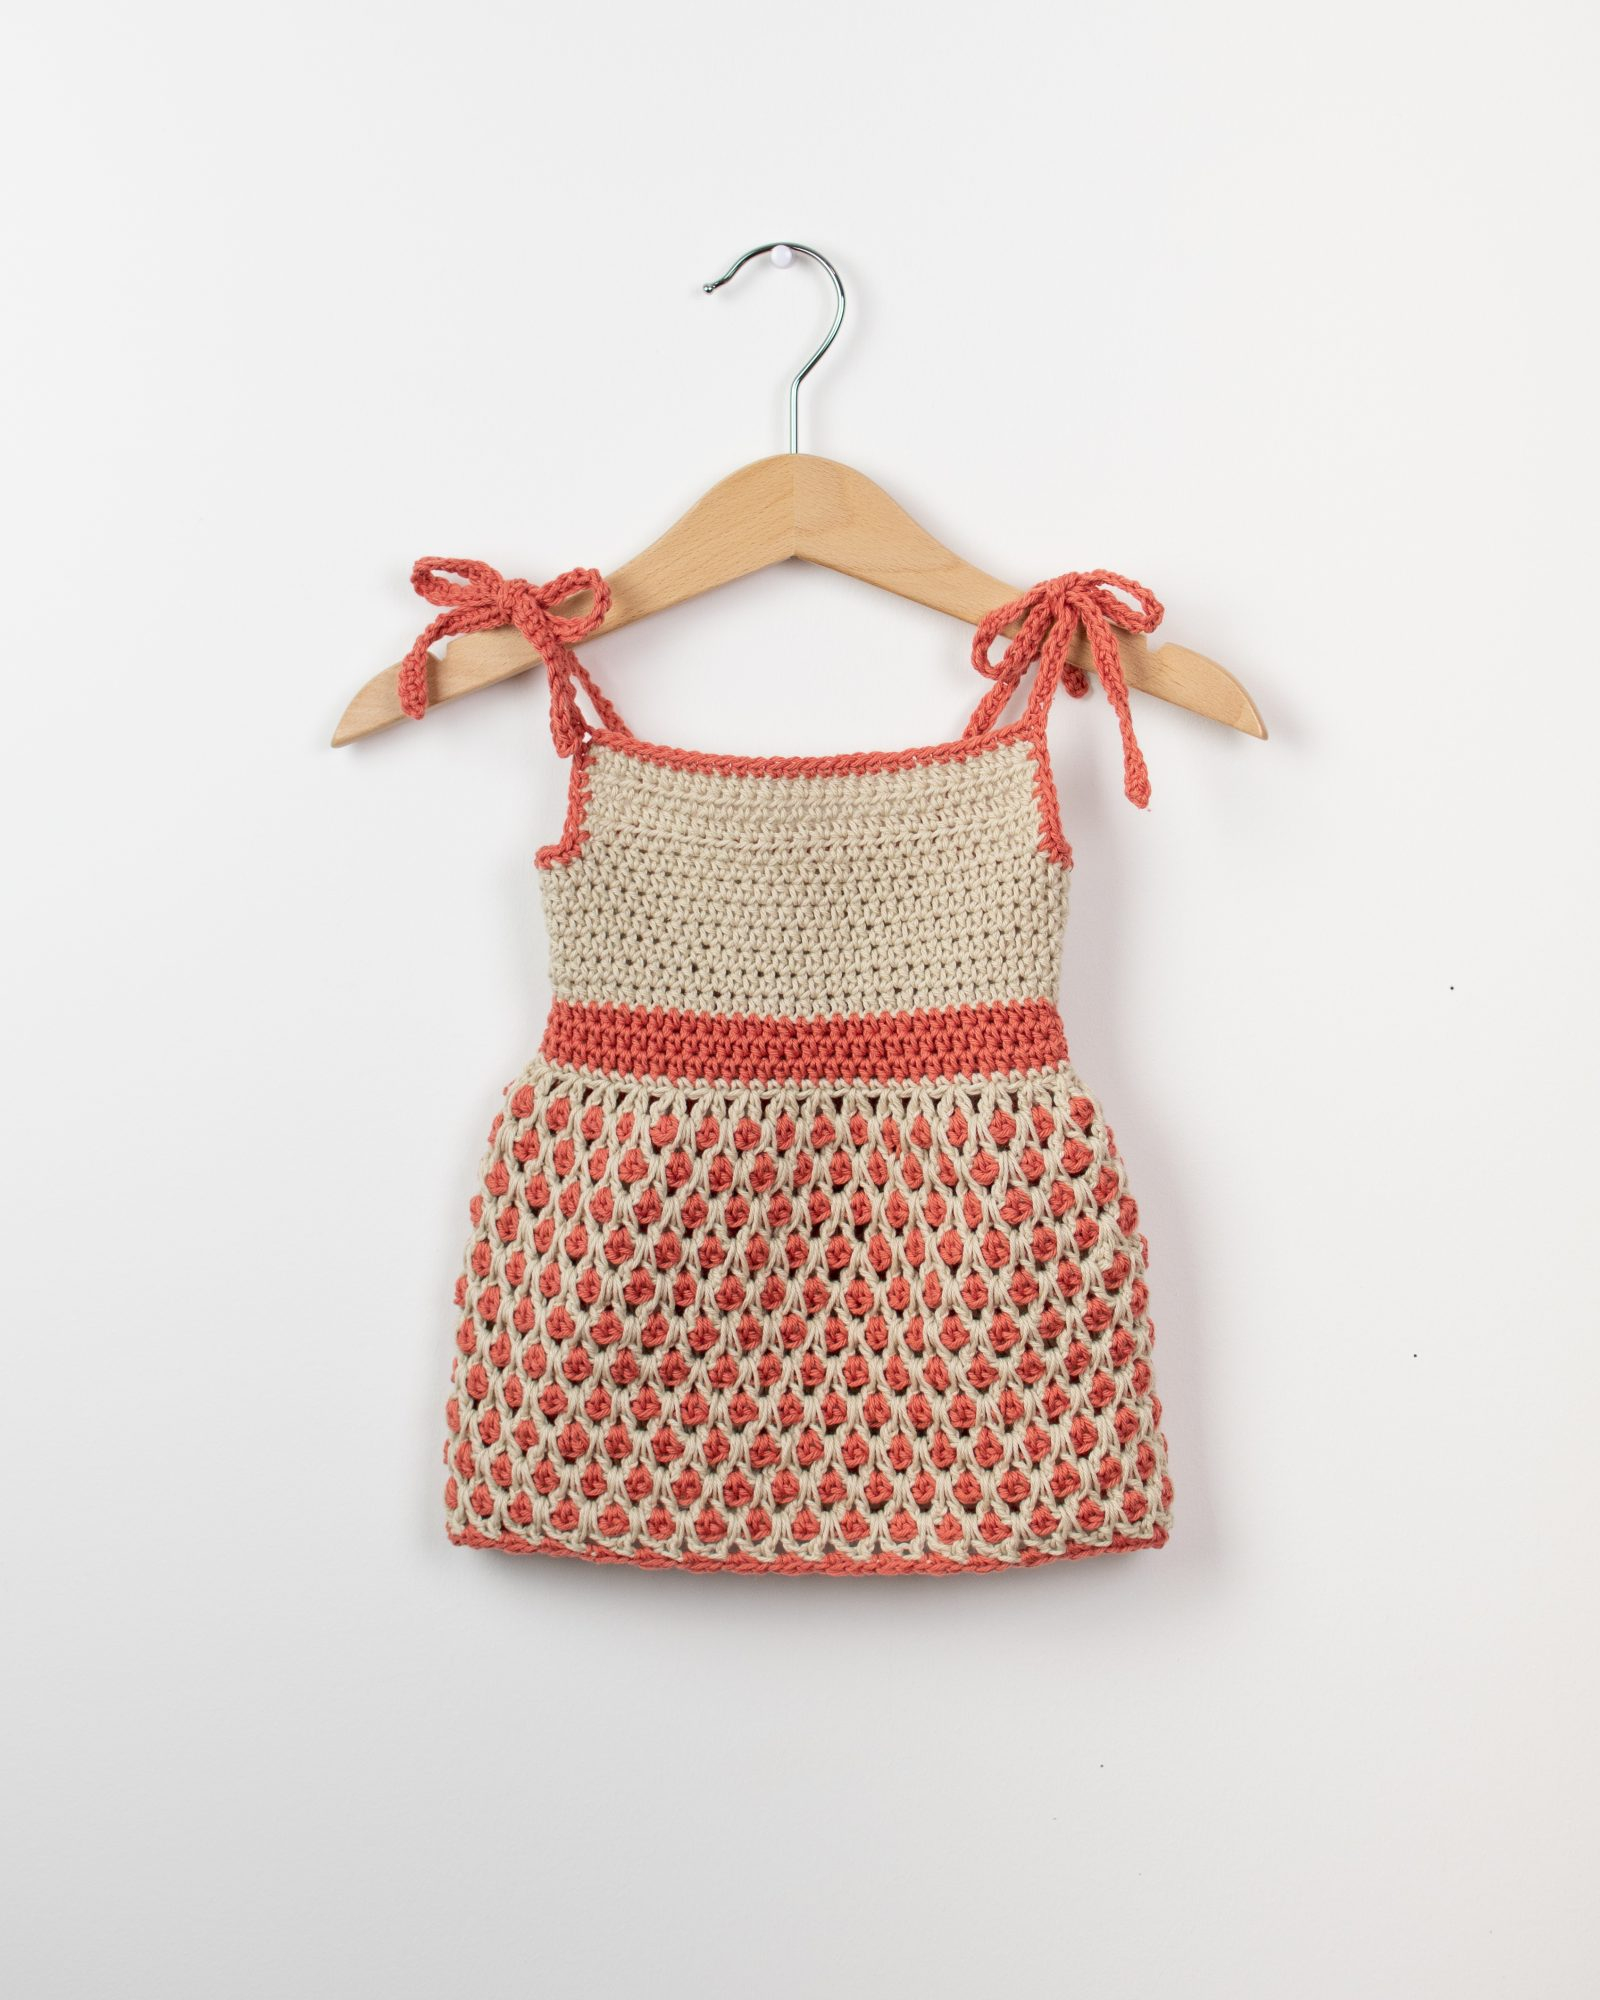 Crochet Baby Pinafore Dress Pattern Crochet Pattern For A Ba Dress Little Ladybug Cro Patterns